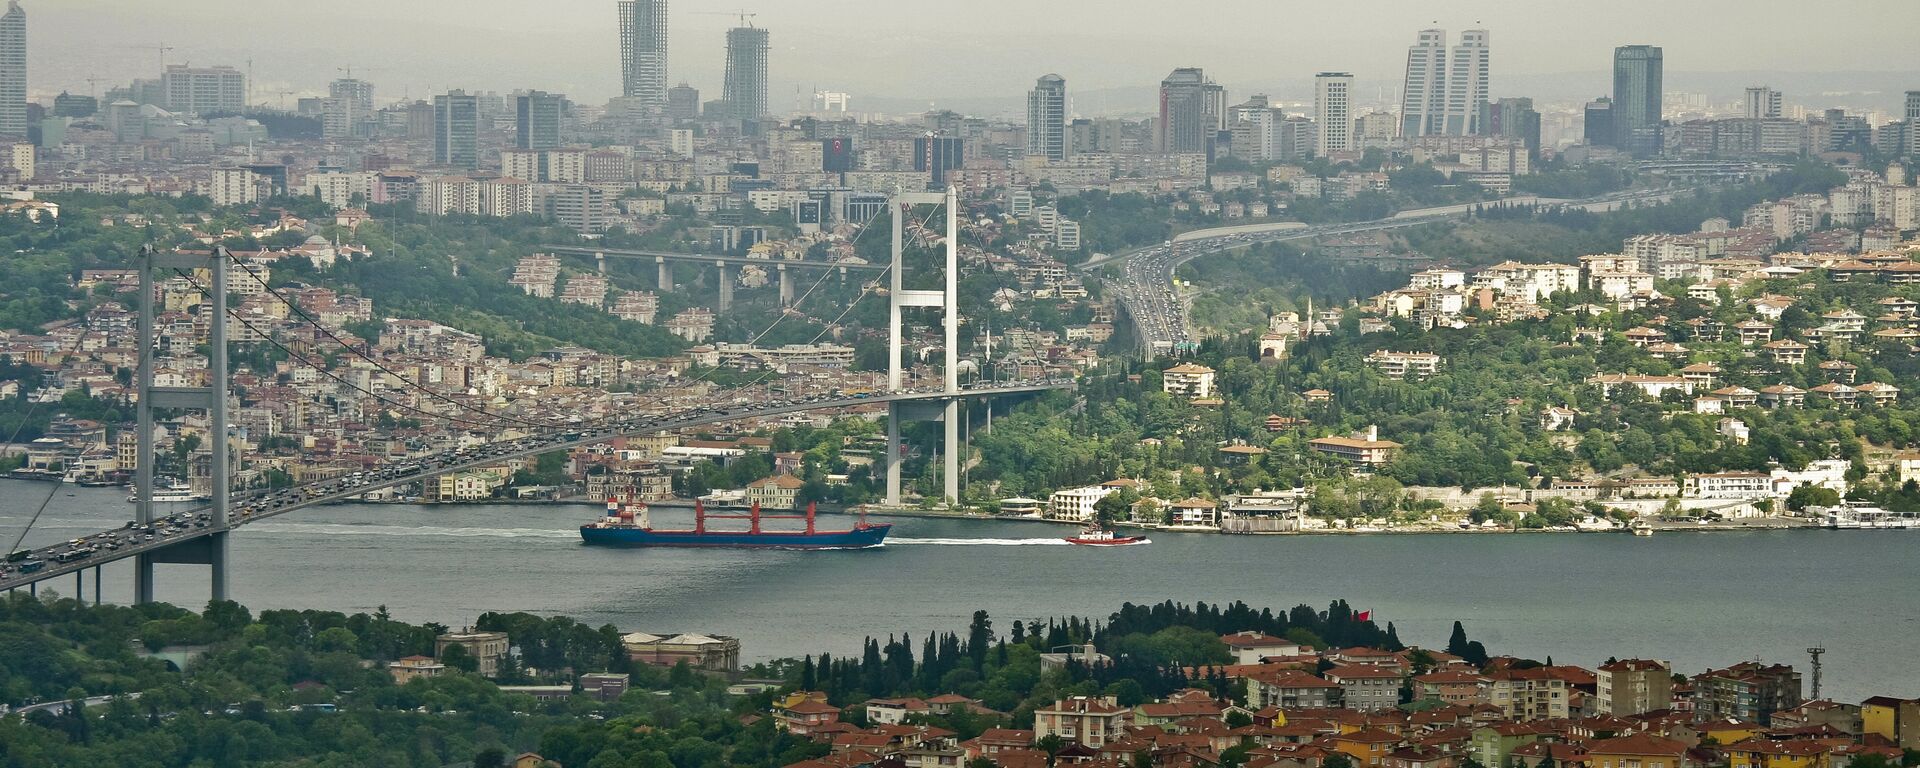 El estrecho de Bósforo en Estambul - Sputnik Mundo, 1920, 16.06.2017